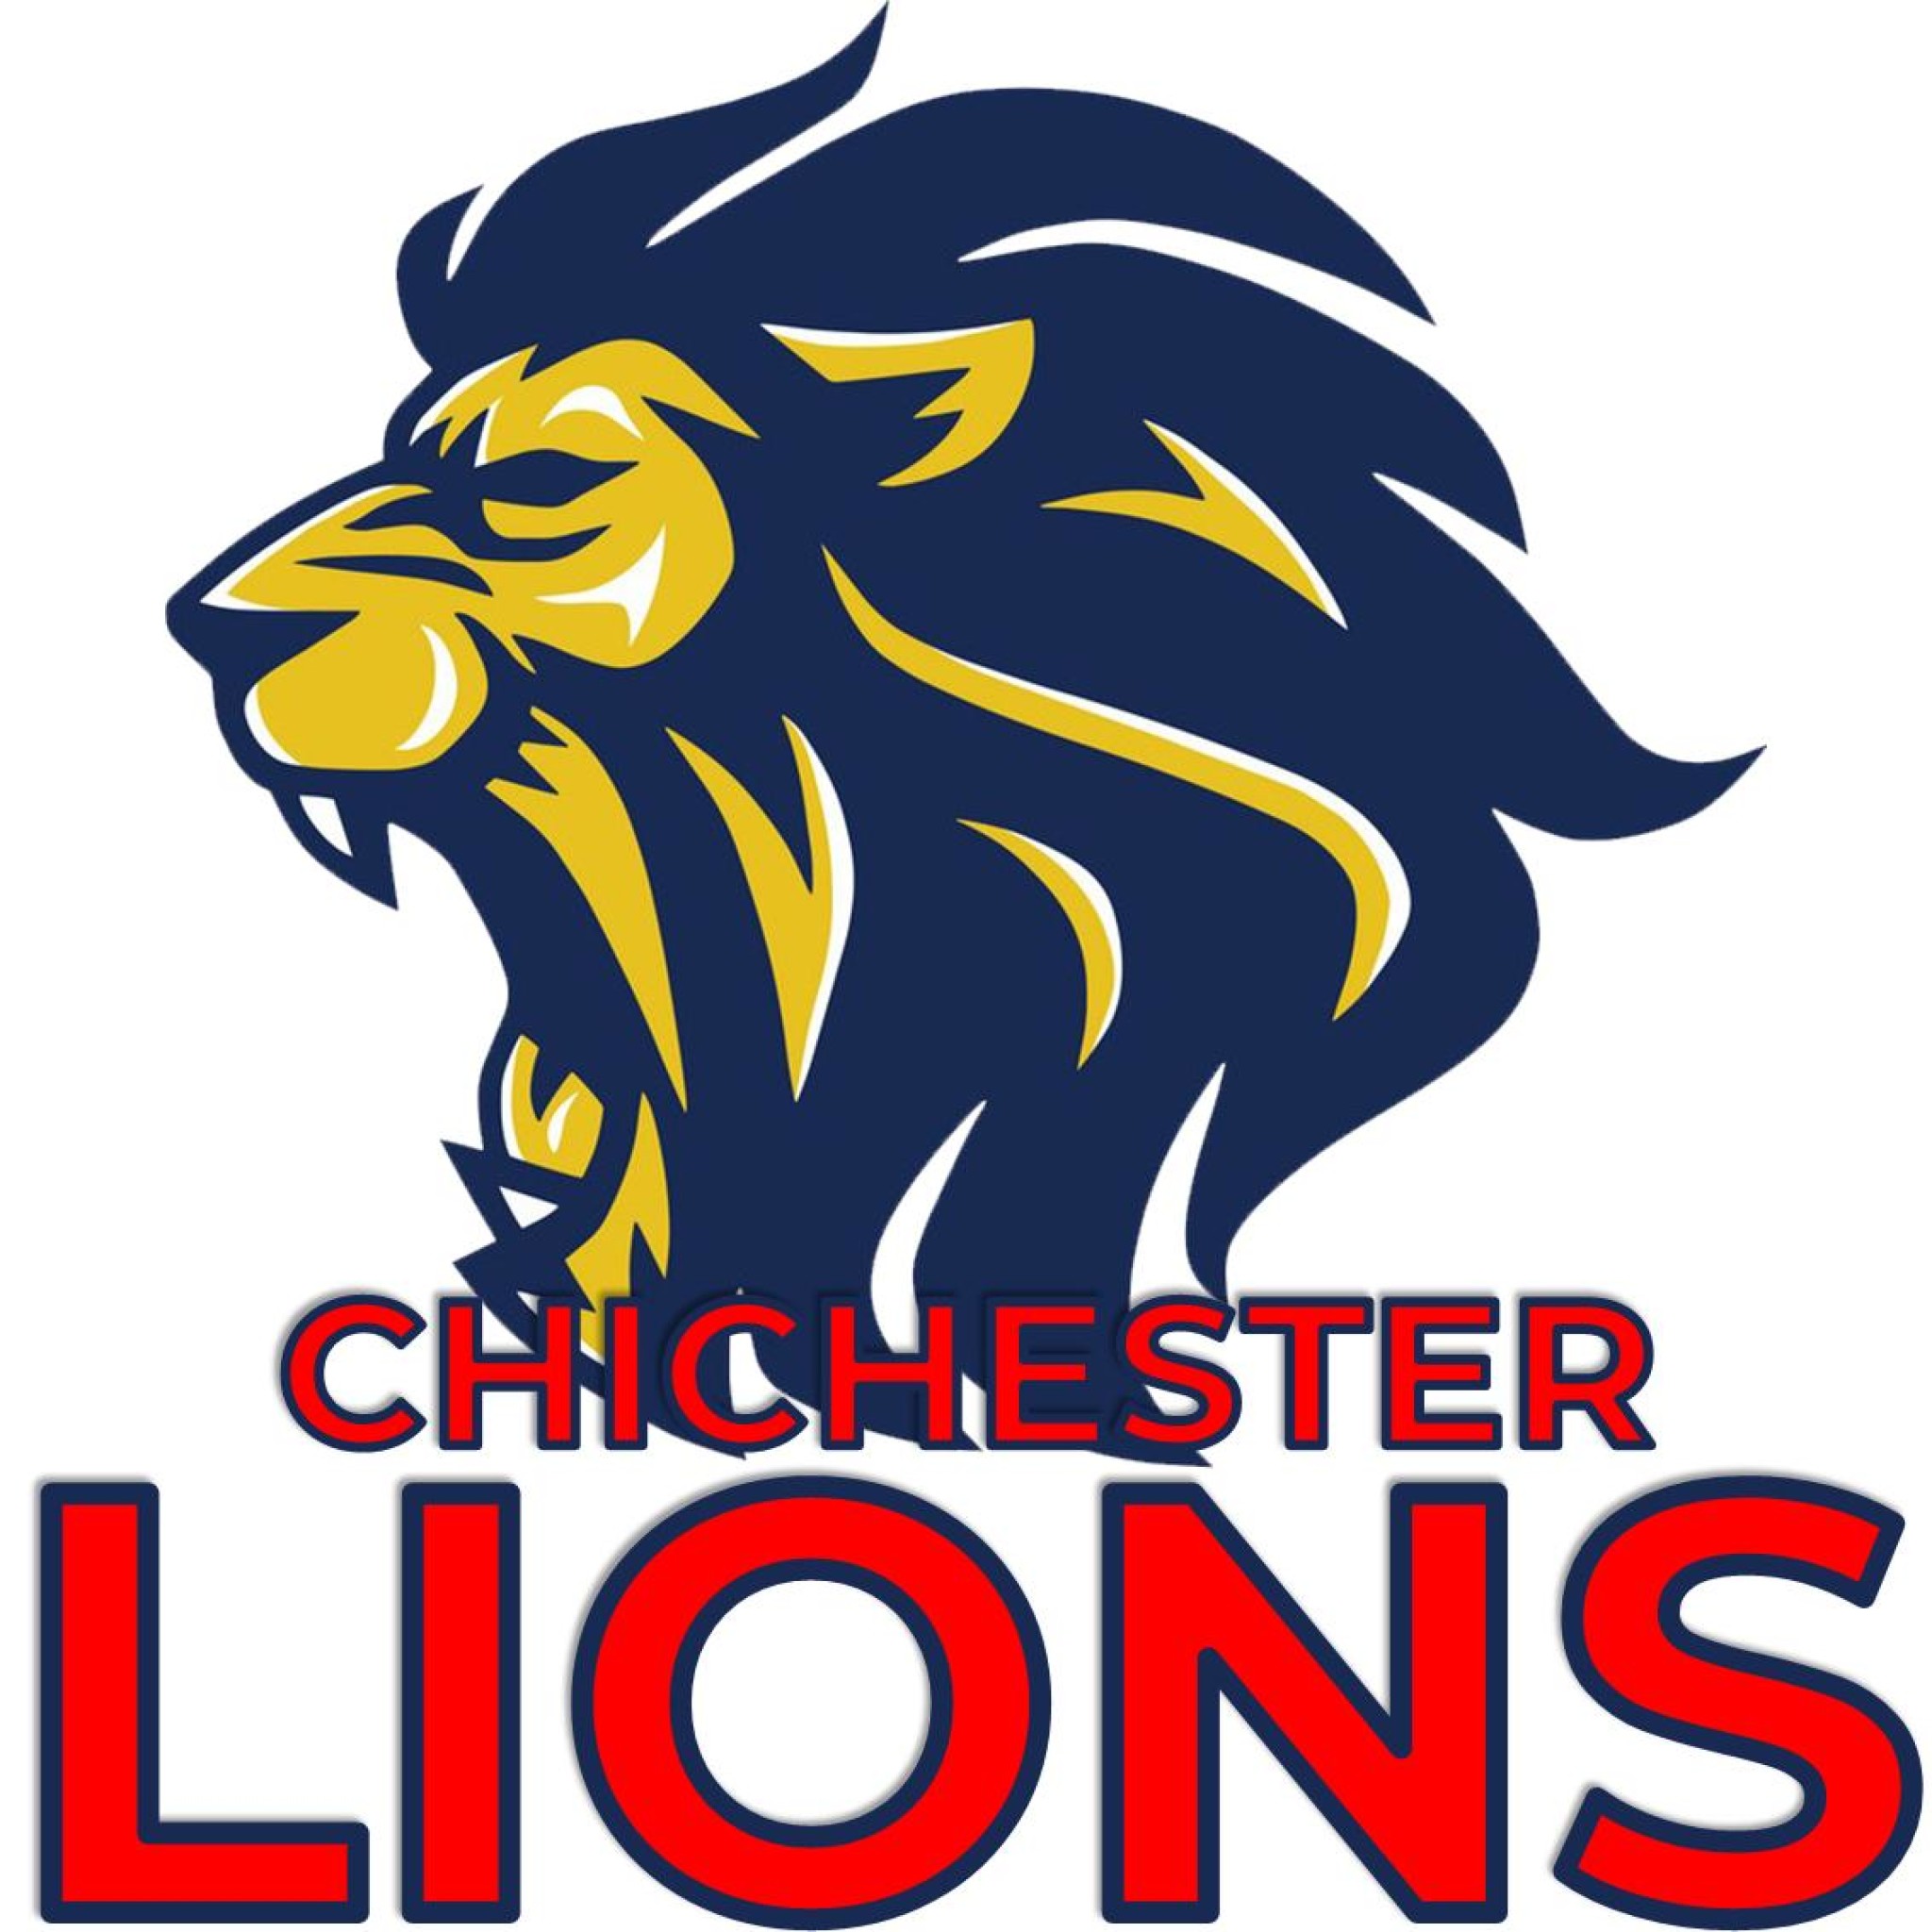 Chichester Lions logo.jpg